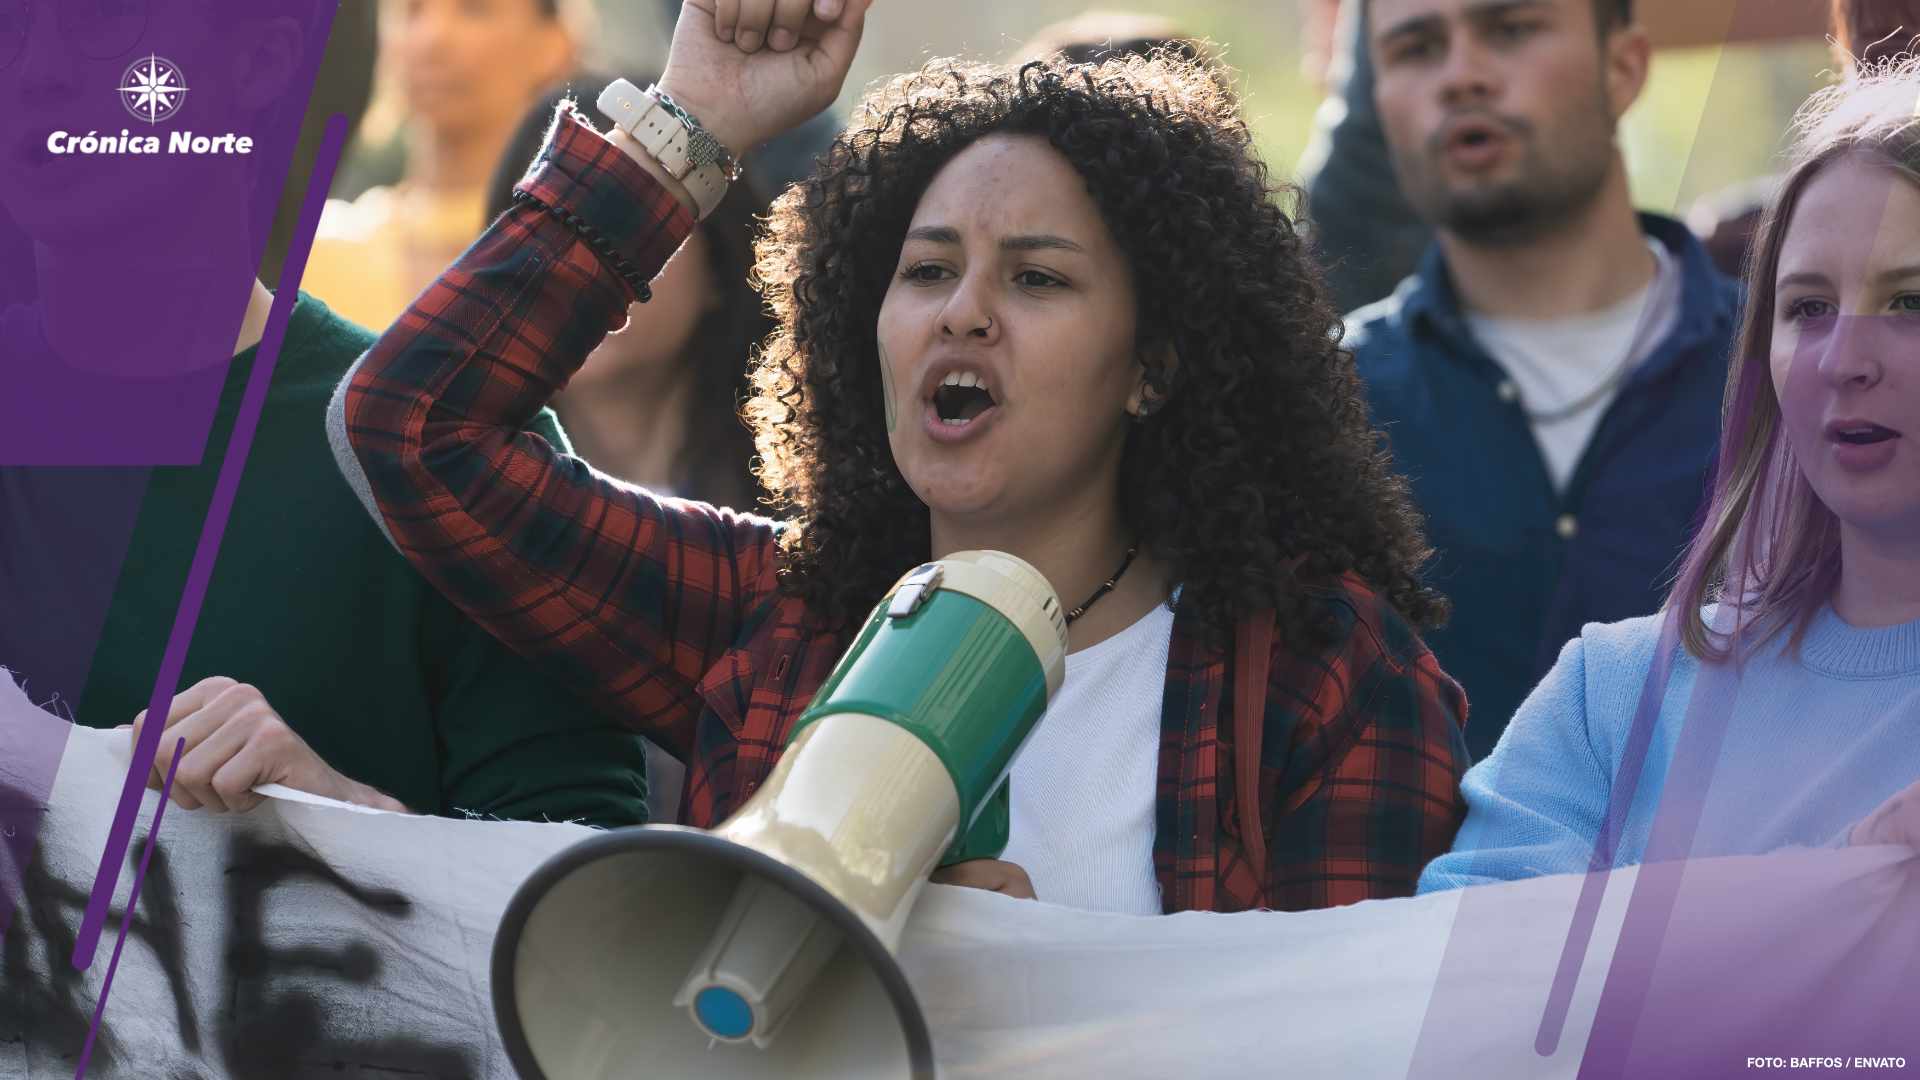 Ola de manifestaciones llega a universidades de Canadá